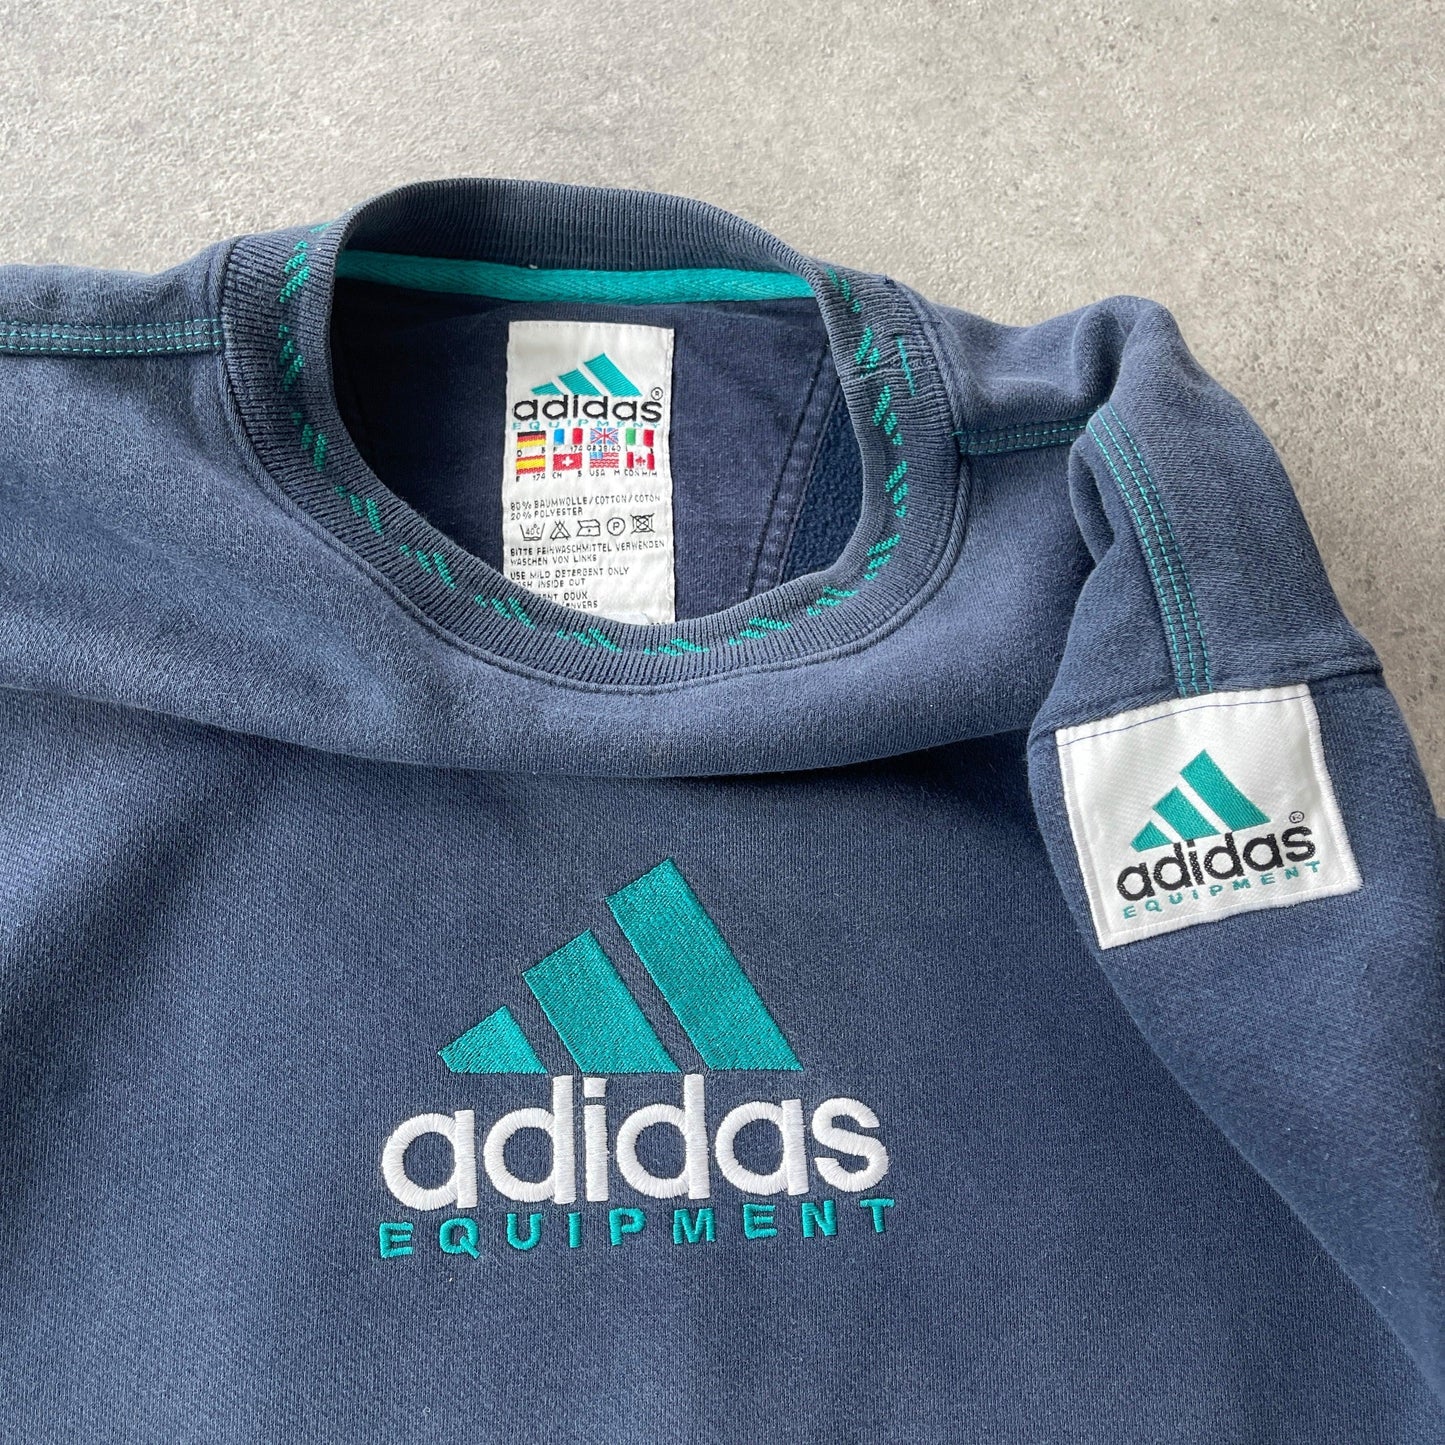 Adidas Equipment 1990s heavyweight embroidered sweatshirt (M) - Known Source